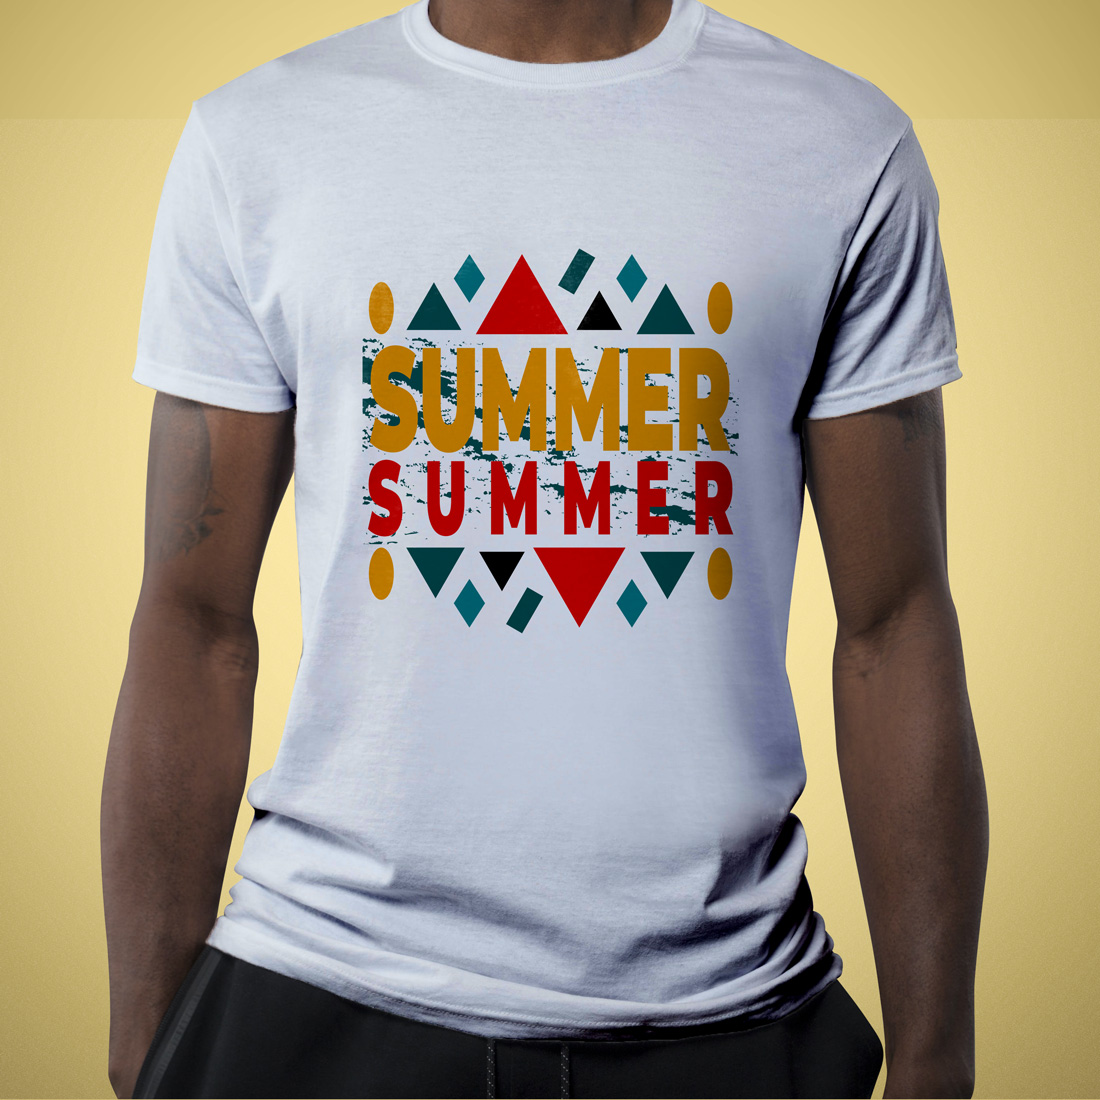 Summer t-shirt design preview image.